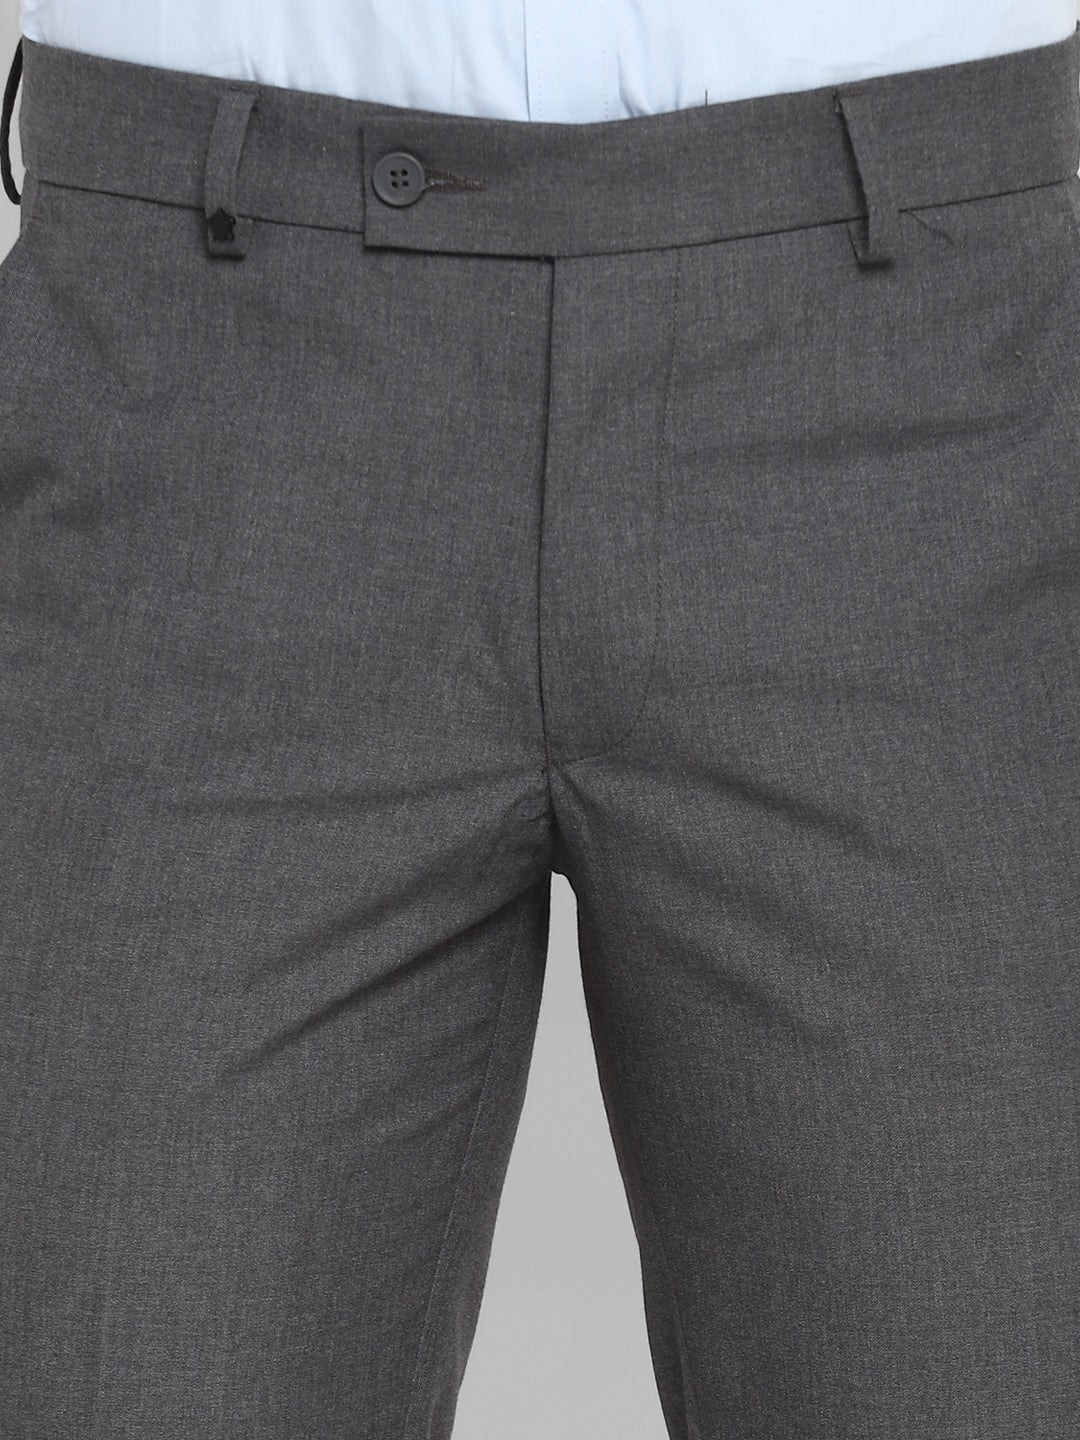 Buy Brown Trousers  Pants for Men by TURTLE Online  Ajiocom